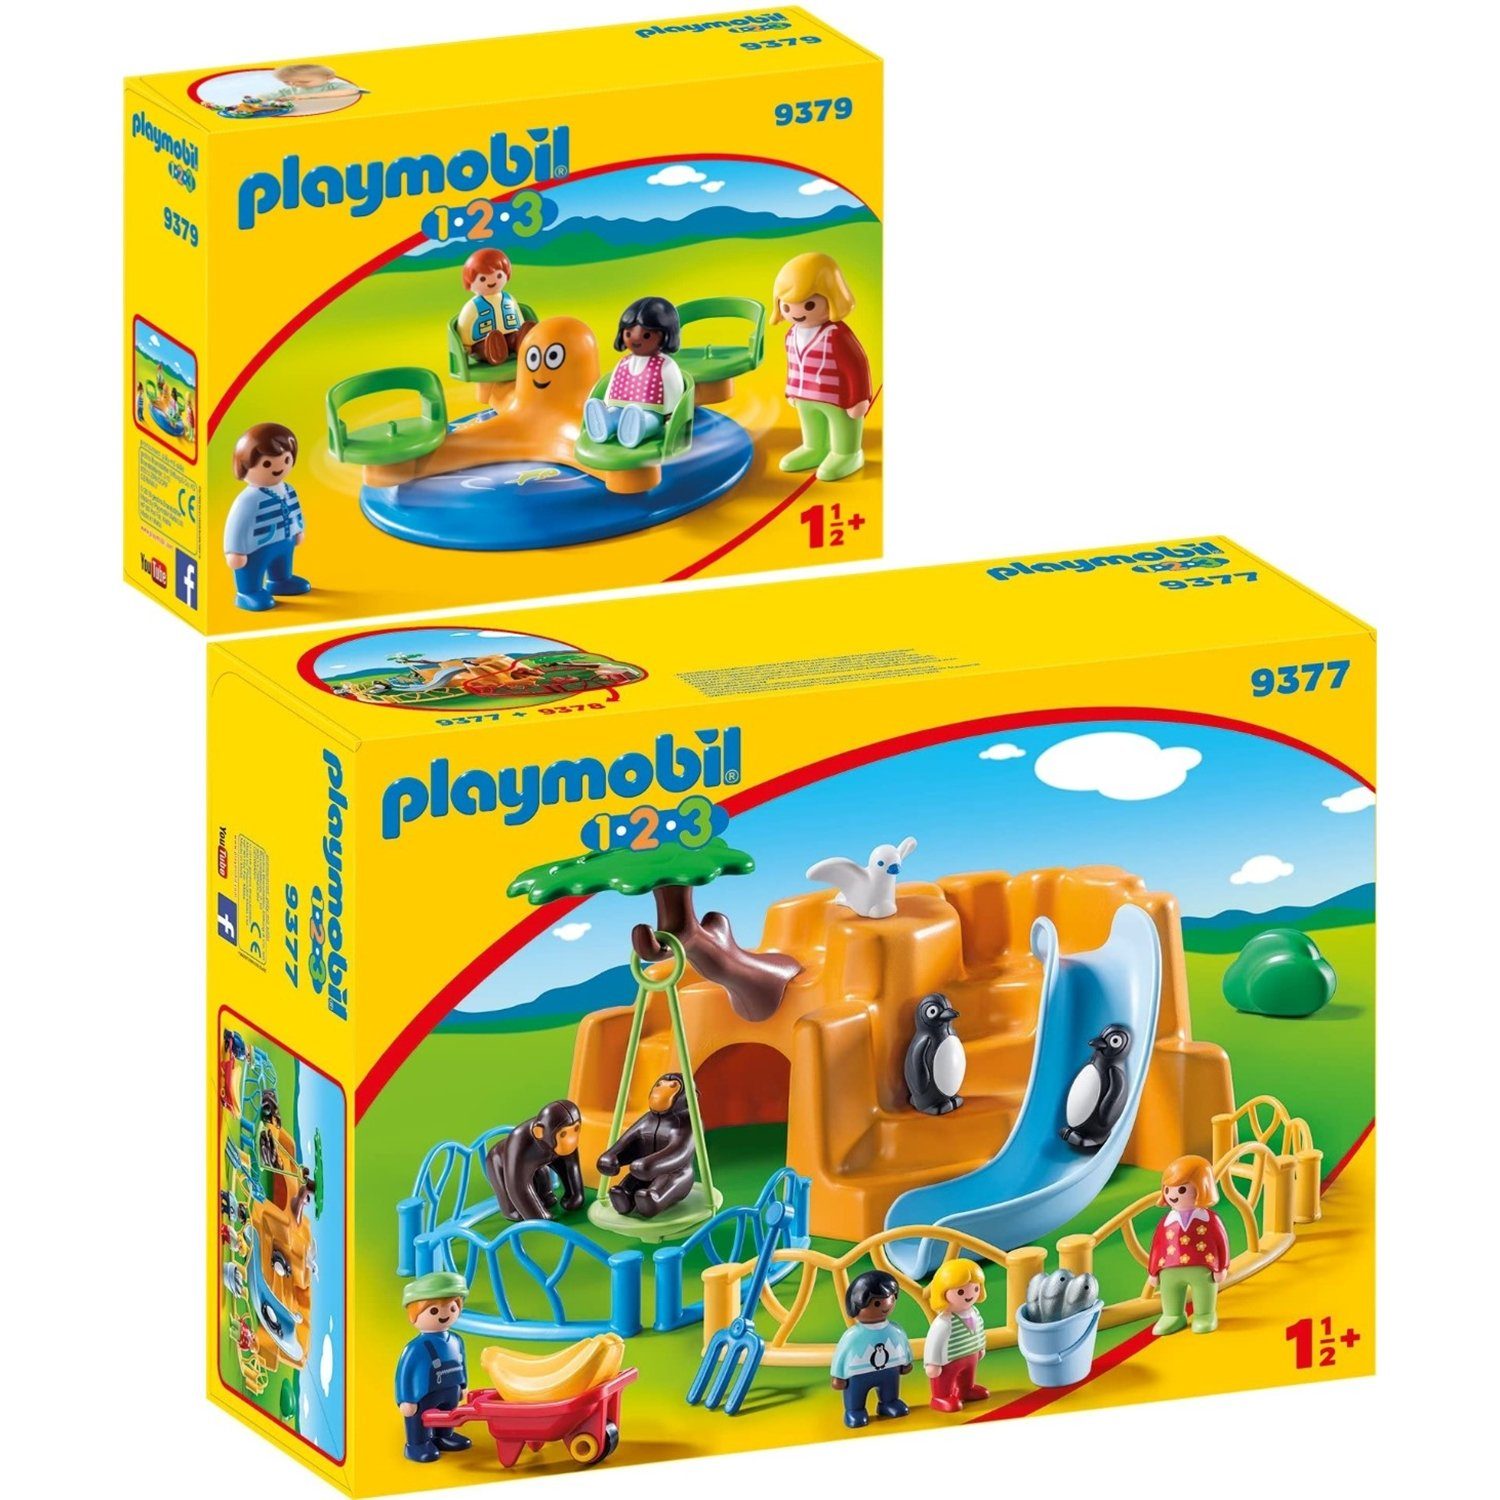 Playmobil® Spielbausteine 9377 9379 1.2.3 2er Set Zoo + Kinderkarussell